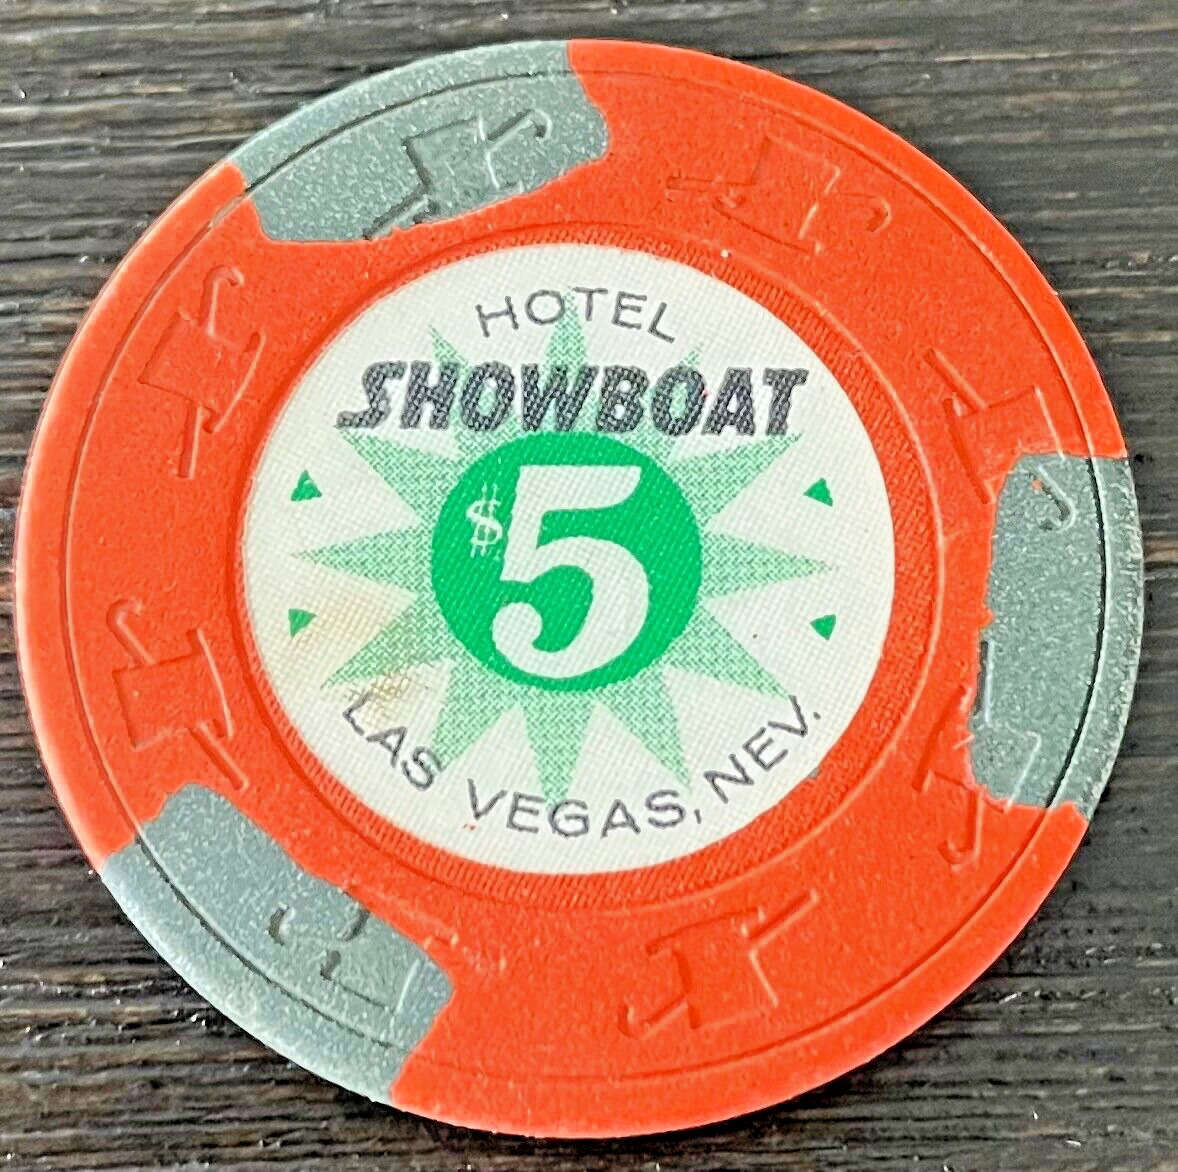 Showboat Hotel Casino The Strip Las Vegas NV $5 Casino Chip Obsolete